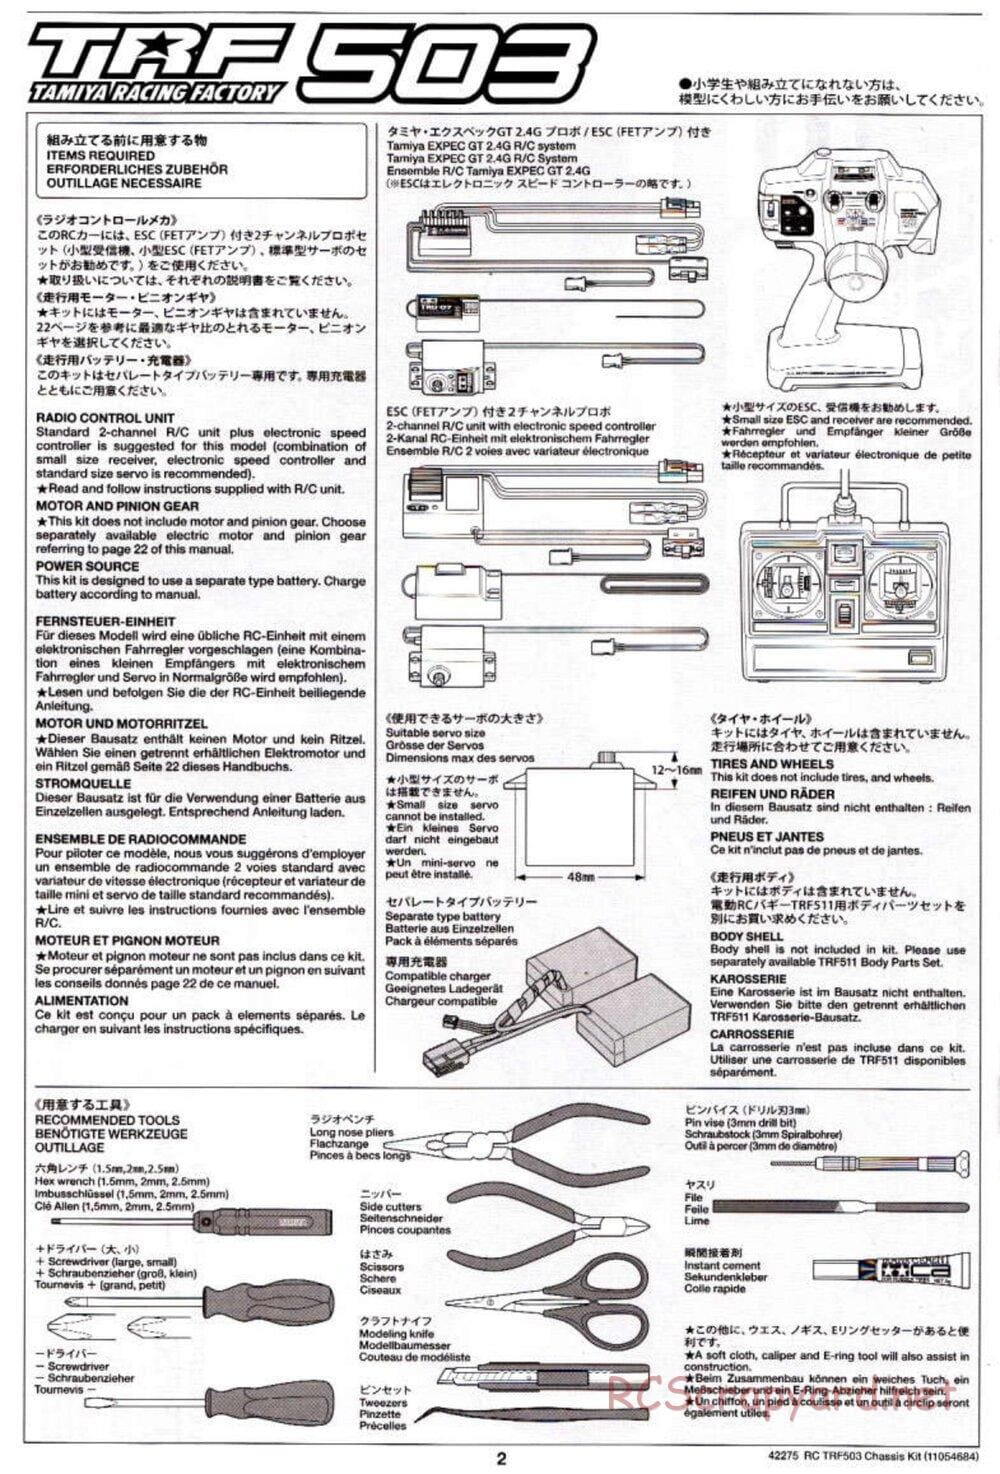 Tamiya - TRF503 Chassis - Manual - Page 2